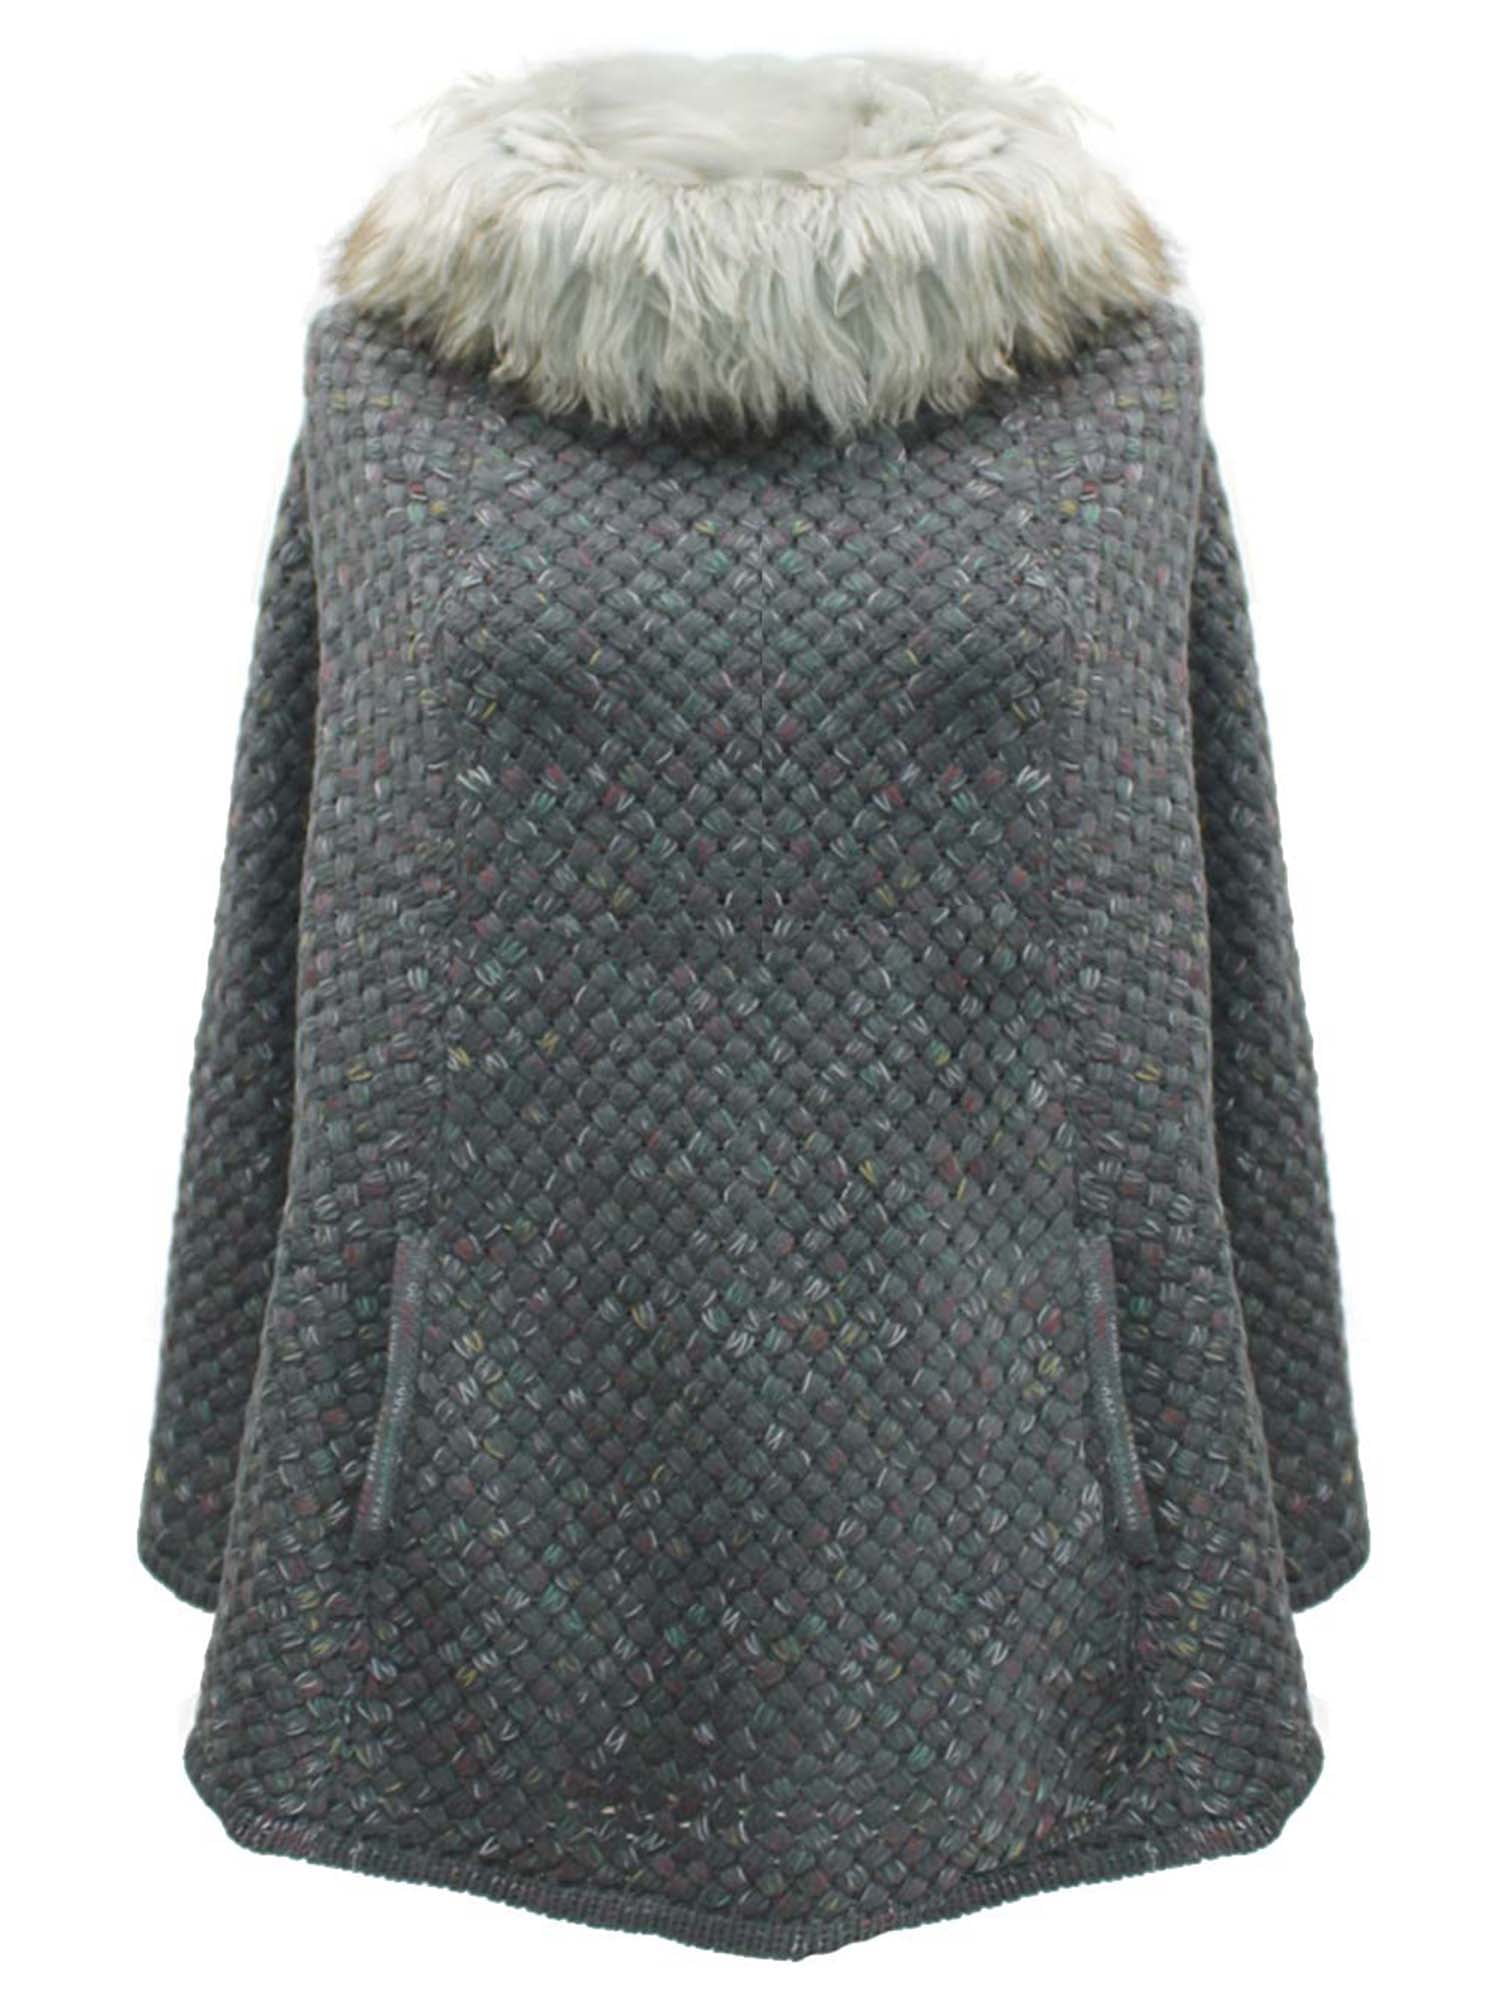 Luxury Divas Gray Knit Poncho with Fur Neckline for Female Adult - Walmart.com